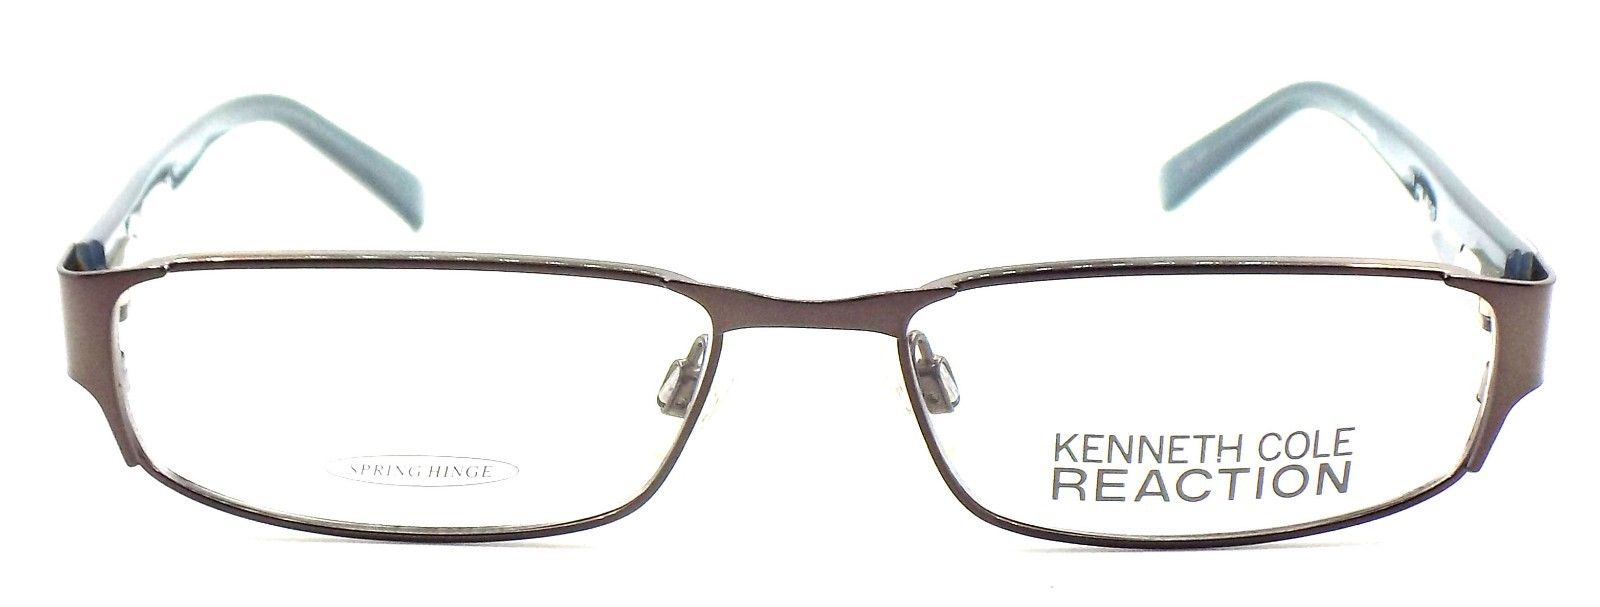 2-Kenneth Cole REACTION KC716 048 Women's Eyeglasses 51-15-135 Shiny Dark Brown-726773169125-IKSpecs